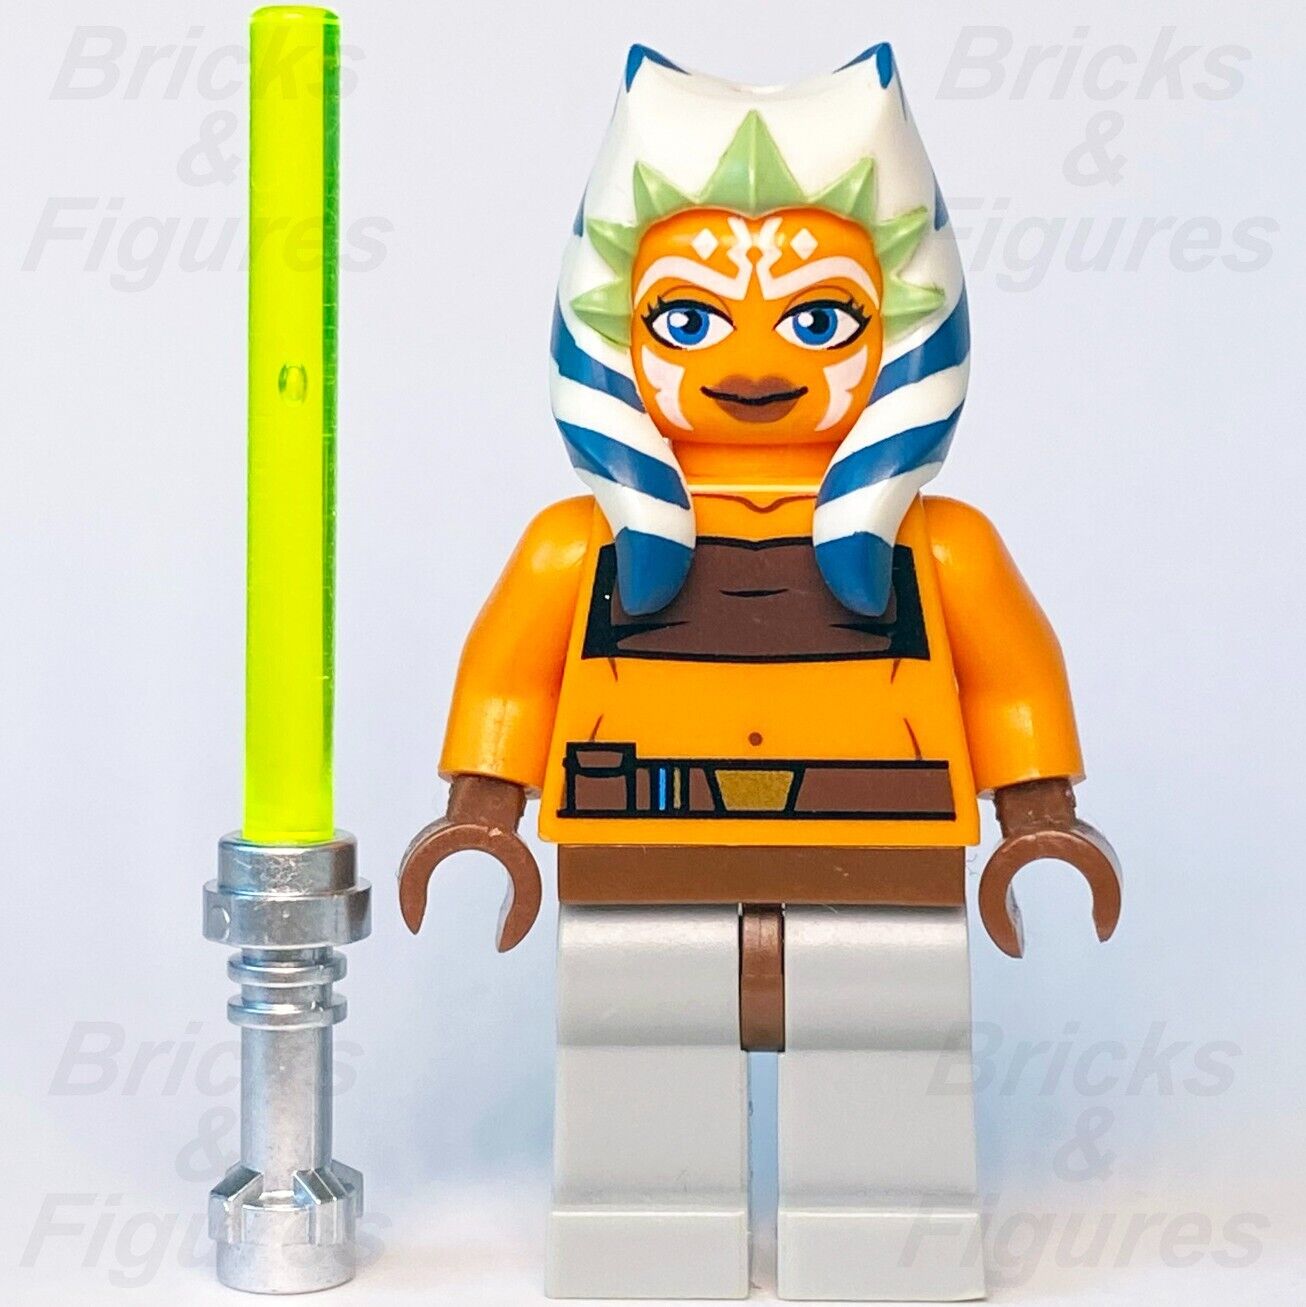 LEGO Star Wars Ahsoka Tano Minifigure Jedi Padawan The Clone Wars 7751 sw0192